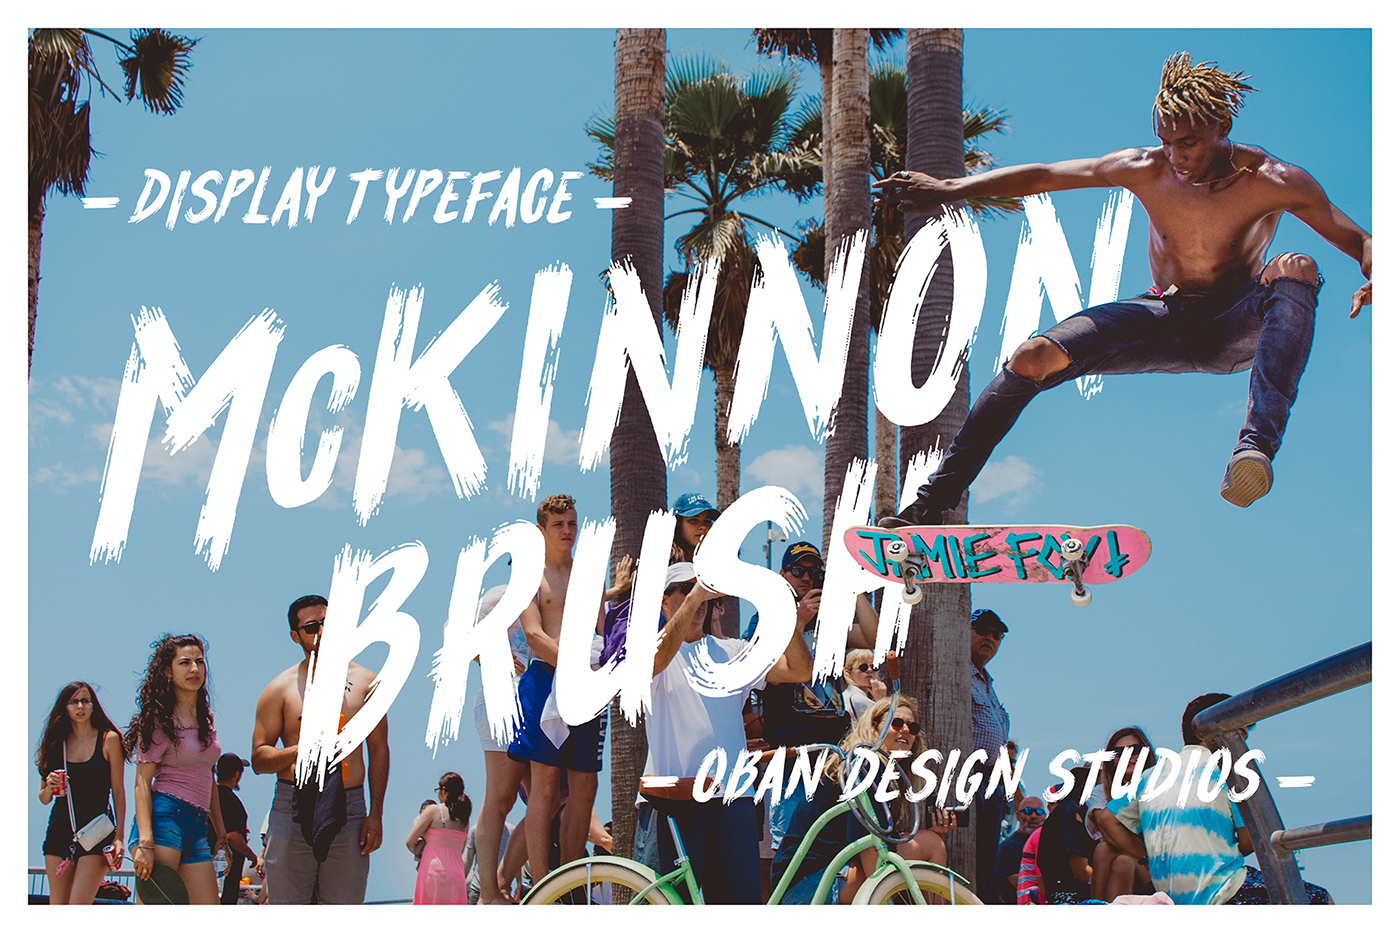 brush stroke peter mckinnon Typeface lettering beach Hipster cool font